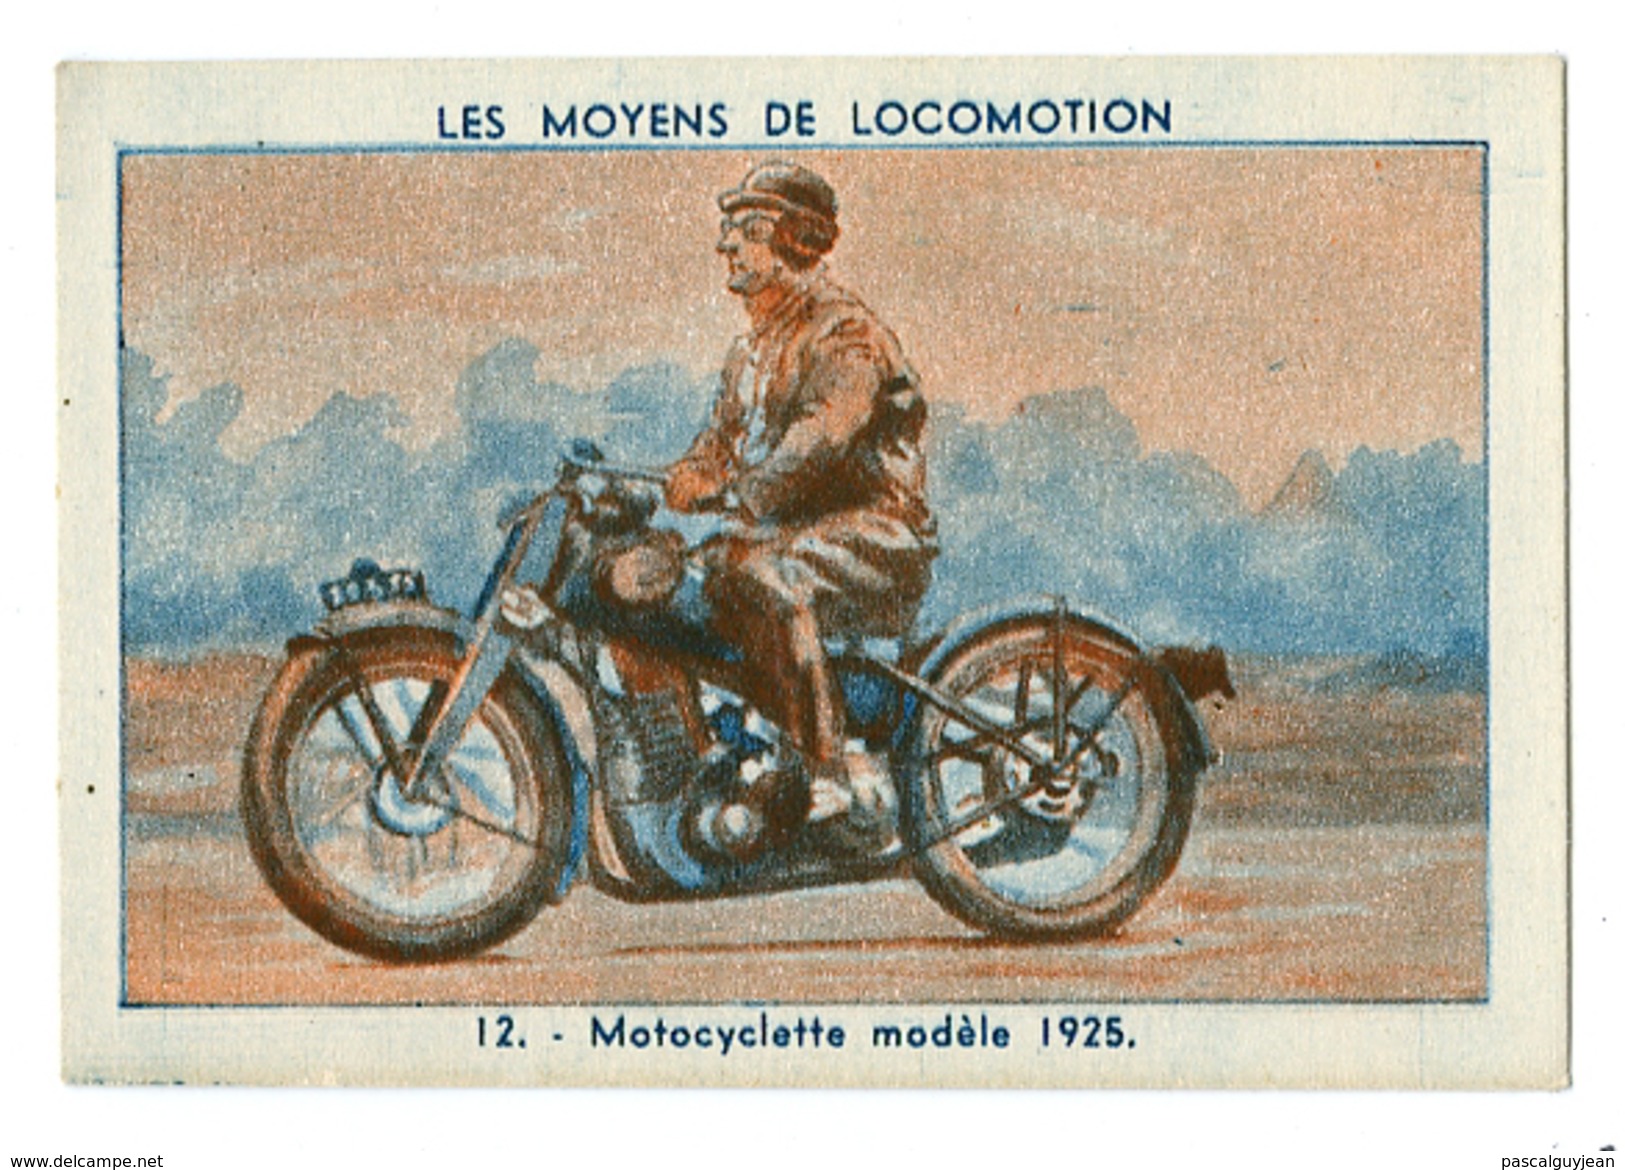 CHROMO LES MOYENS DE LOCOMOTION - MOTOCYCLETTE MODELE 1925 - Autos